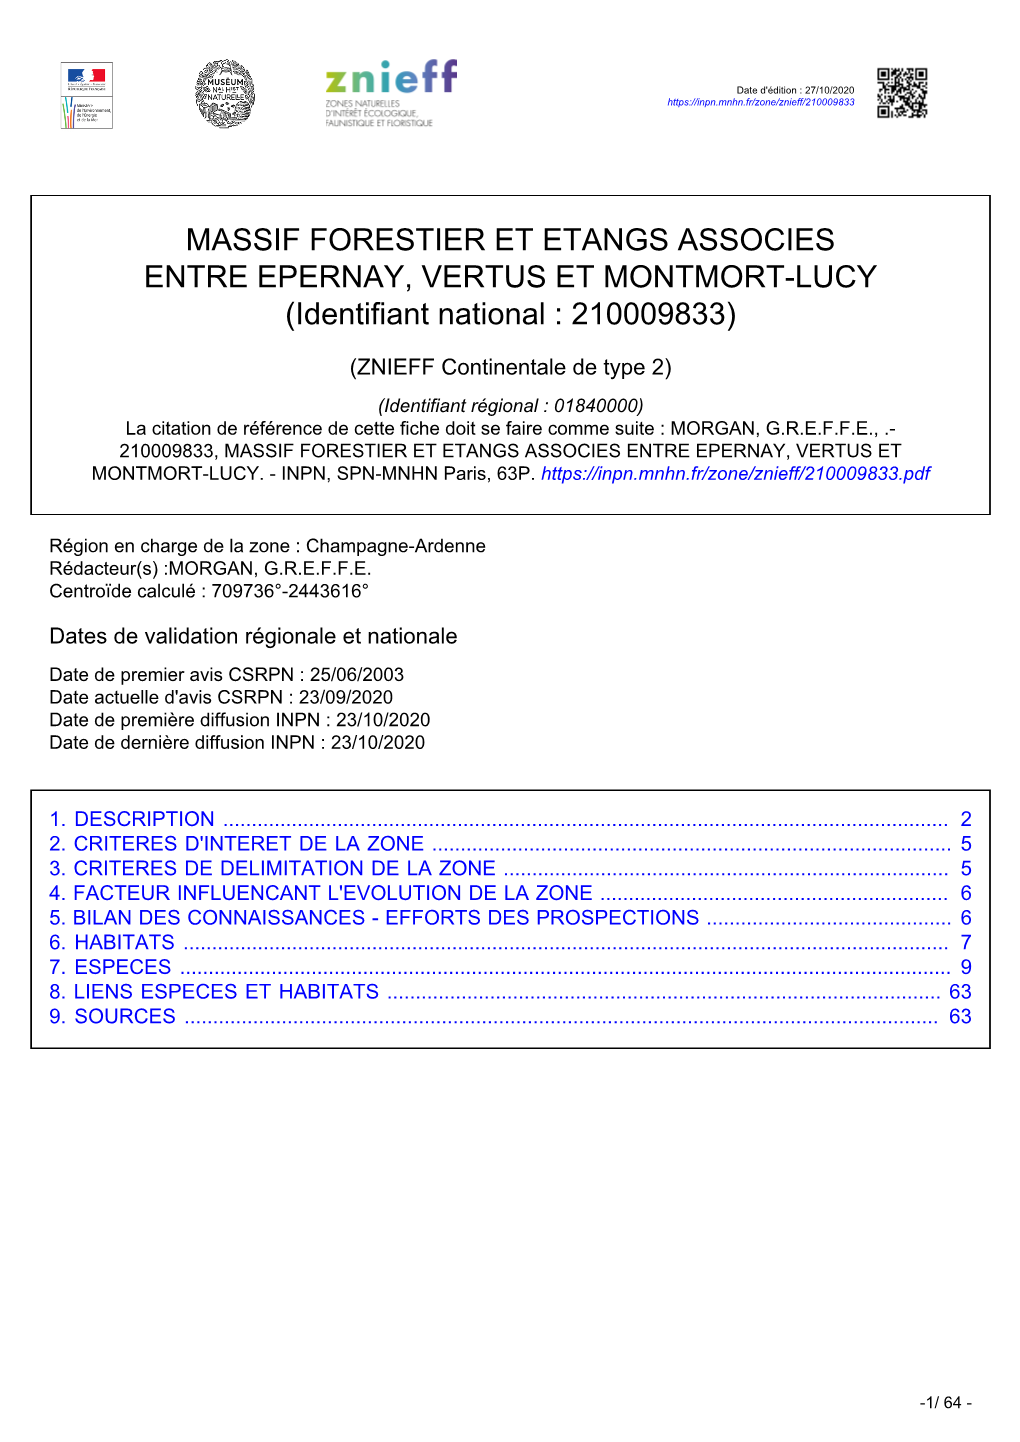 MASSIF FORESTIER ET ETANGS ASSOCIES ENTRE EPERNAY, VERTUS ET MONTMORT-LUCY (Identifiant National : 210009833)